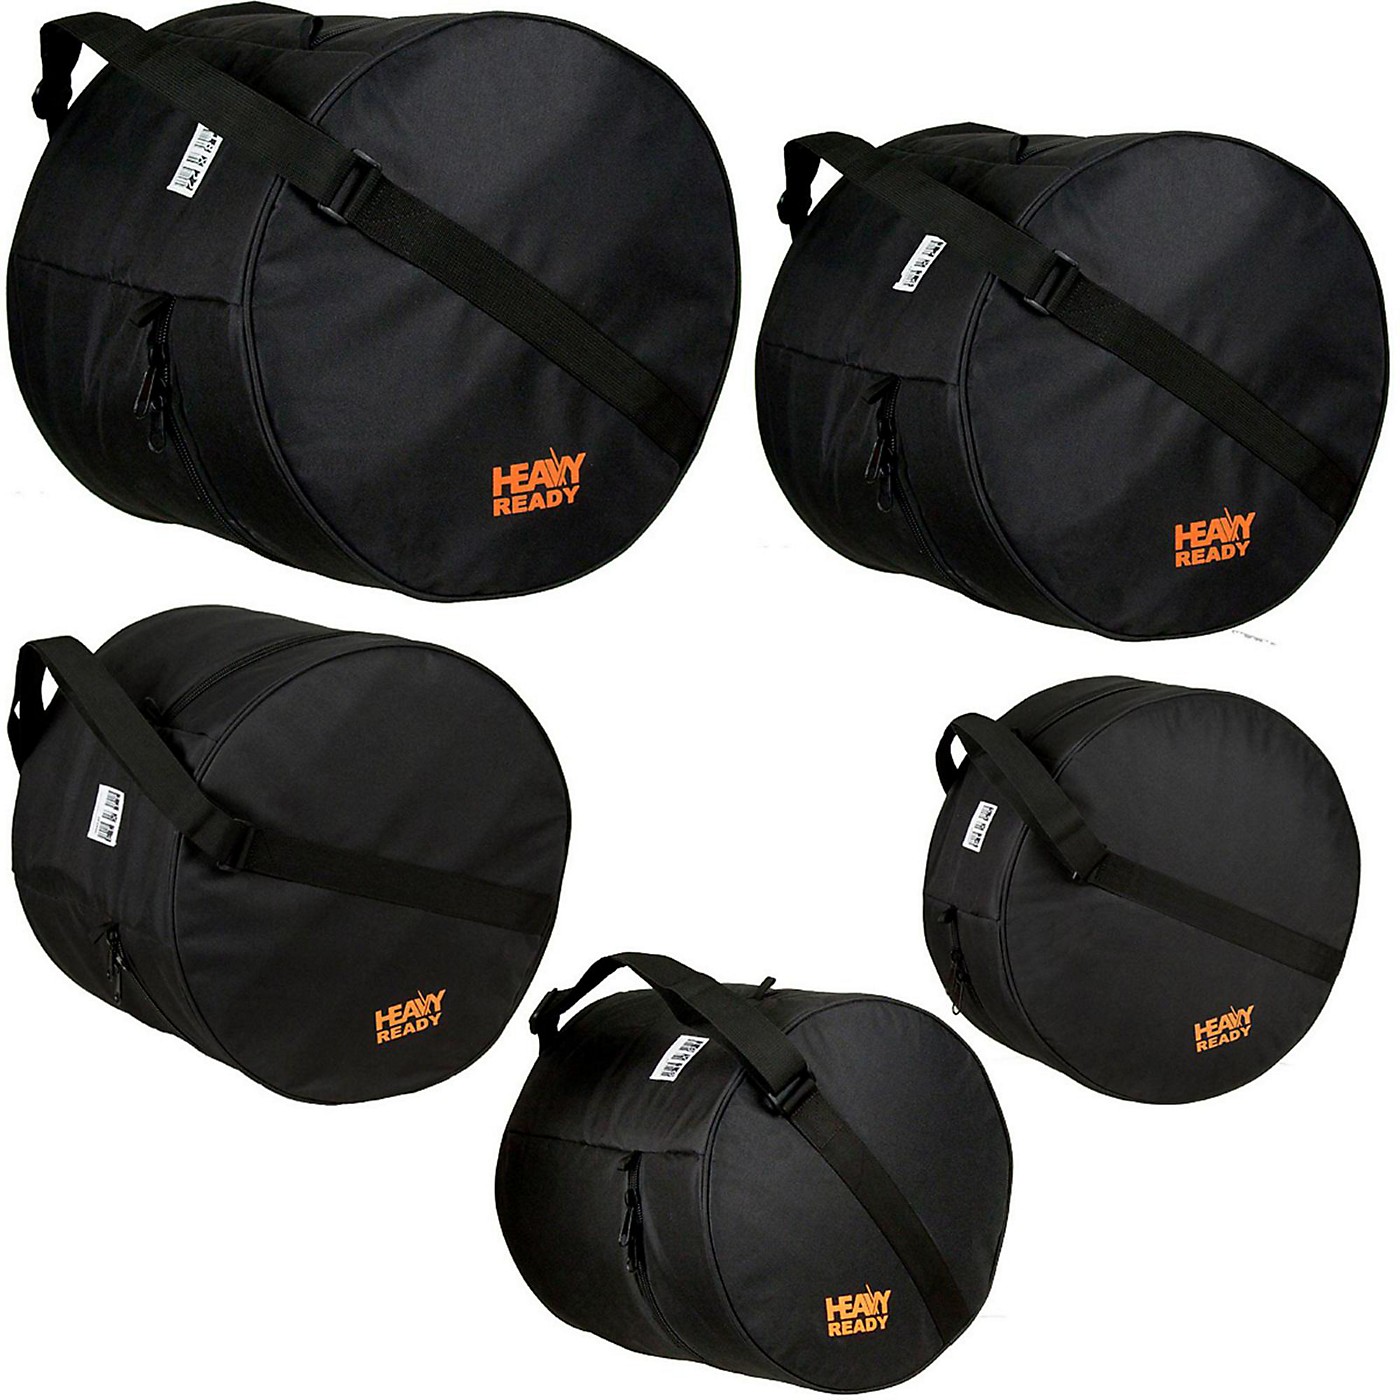 Protec Heavy Ready Series - Drum Bag Set/Standard 1 thumbnail